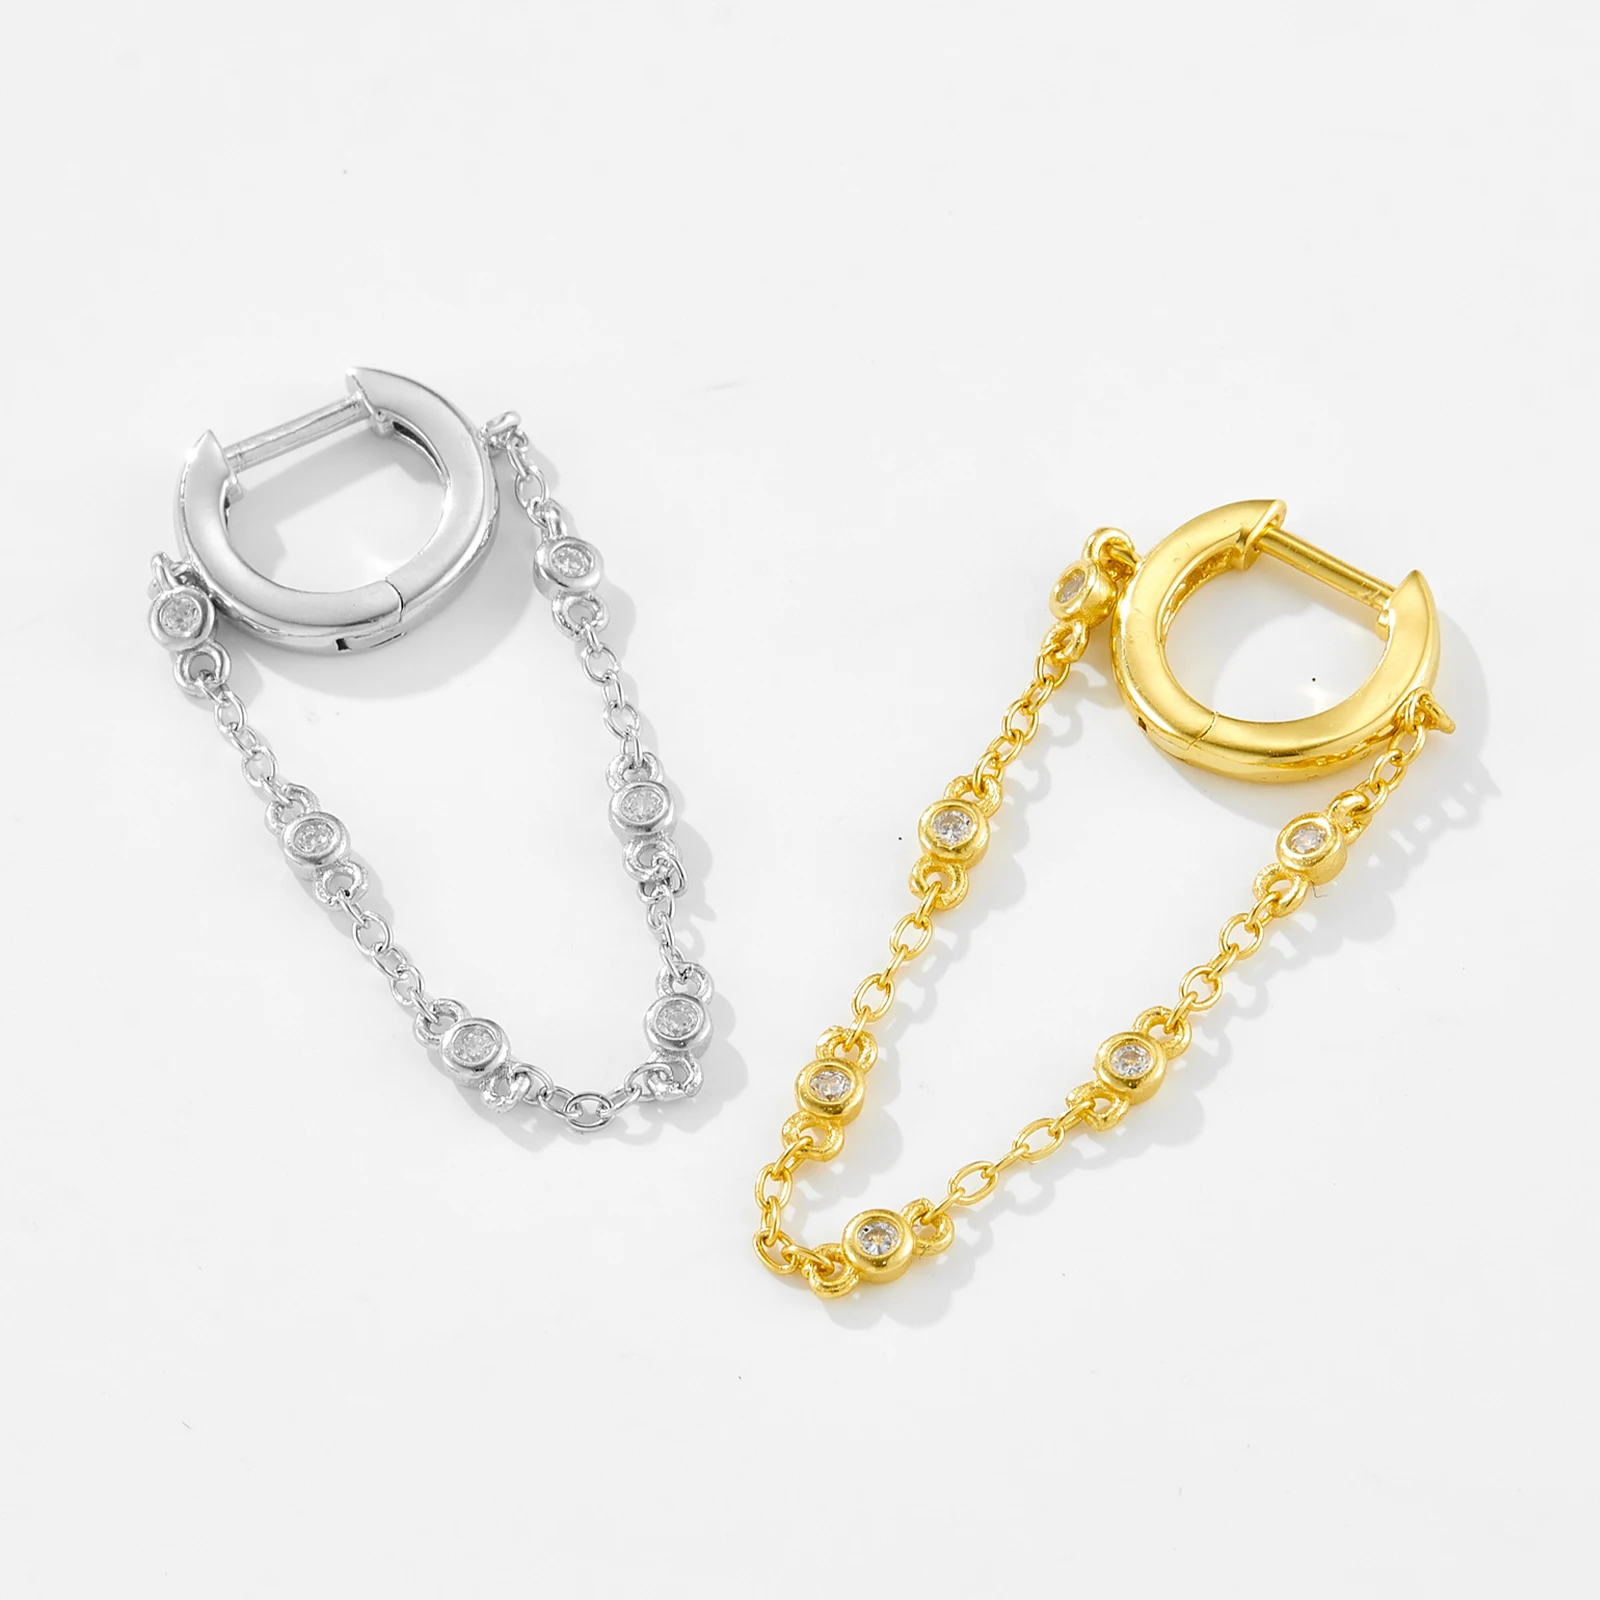 Andywen 925 prata esterlina 8mm única moldura gota fina hoop chain brinco zircon cristal laços círculo clipes de ouro jóias femininas